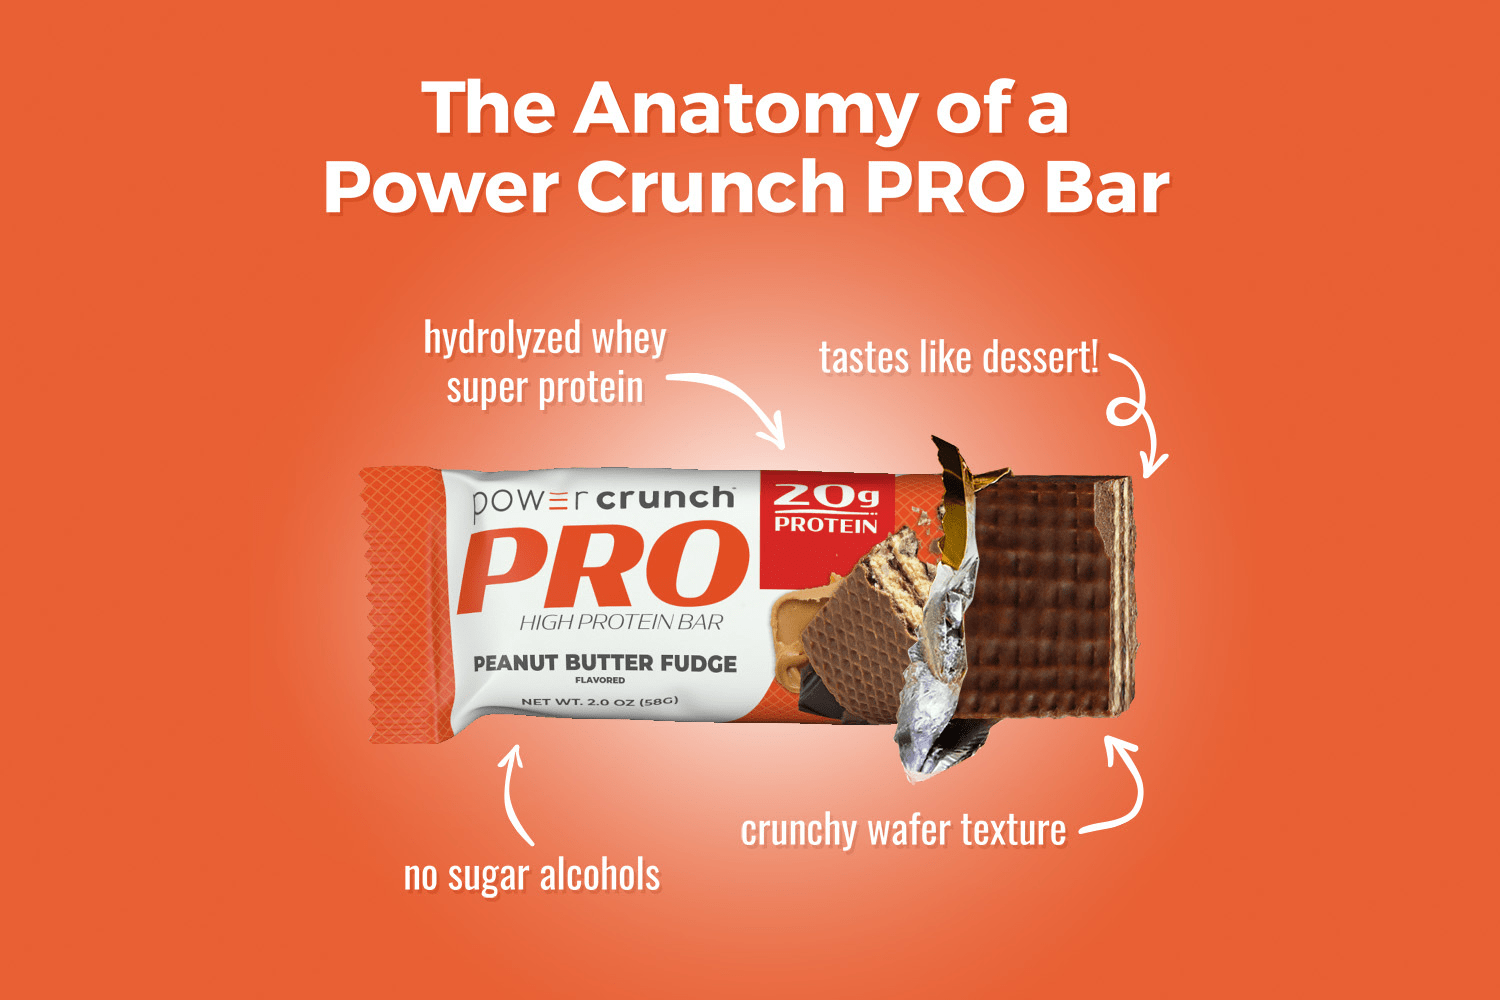 Anatomy of a Power Crunch PRO Peanut Butter Fudge bar with hydrolyzed whey protein, crunchy wafers